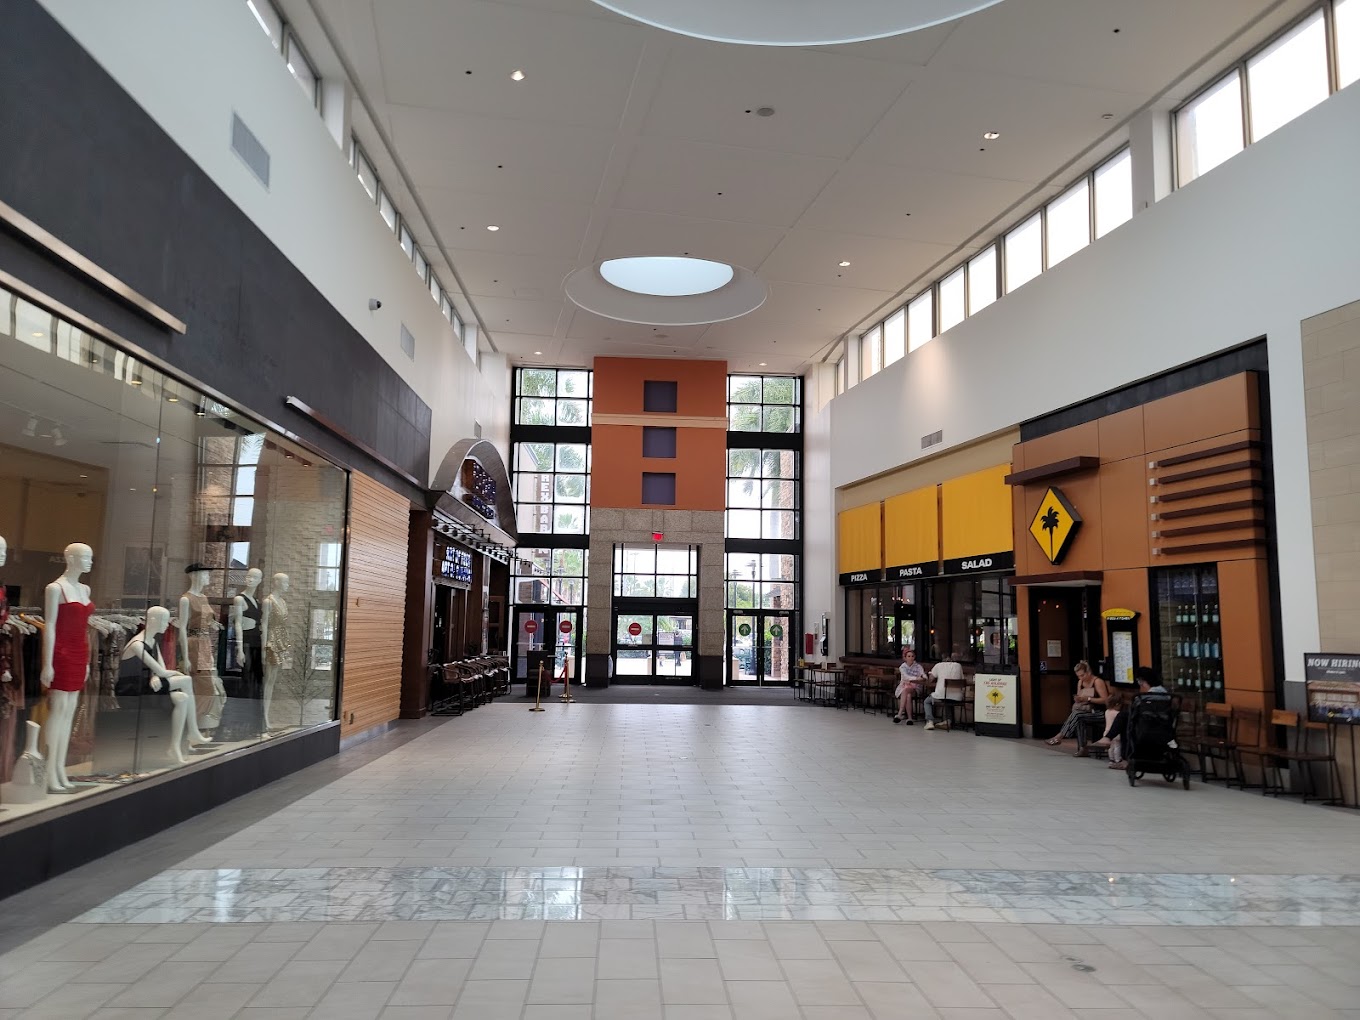 Boca Town Center Mall